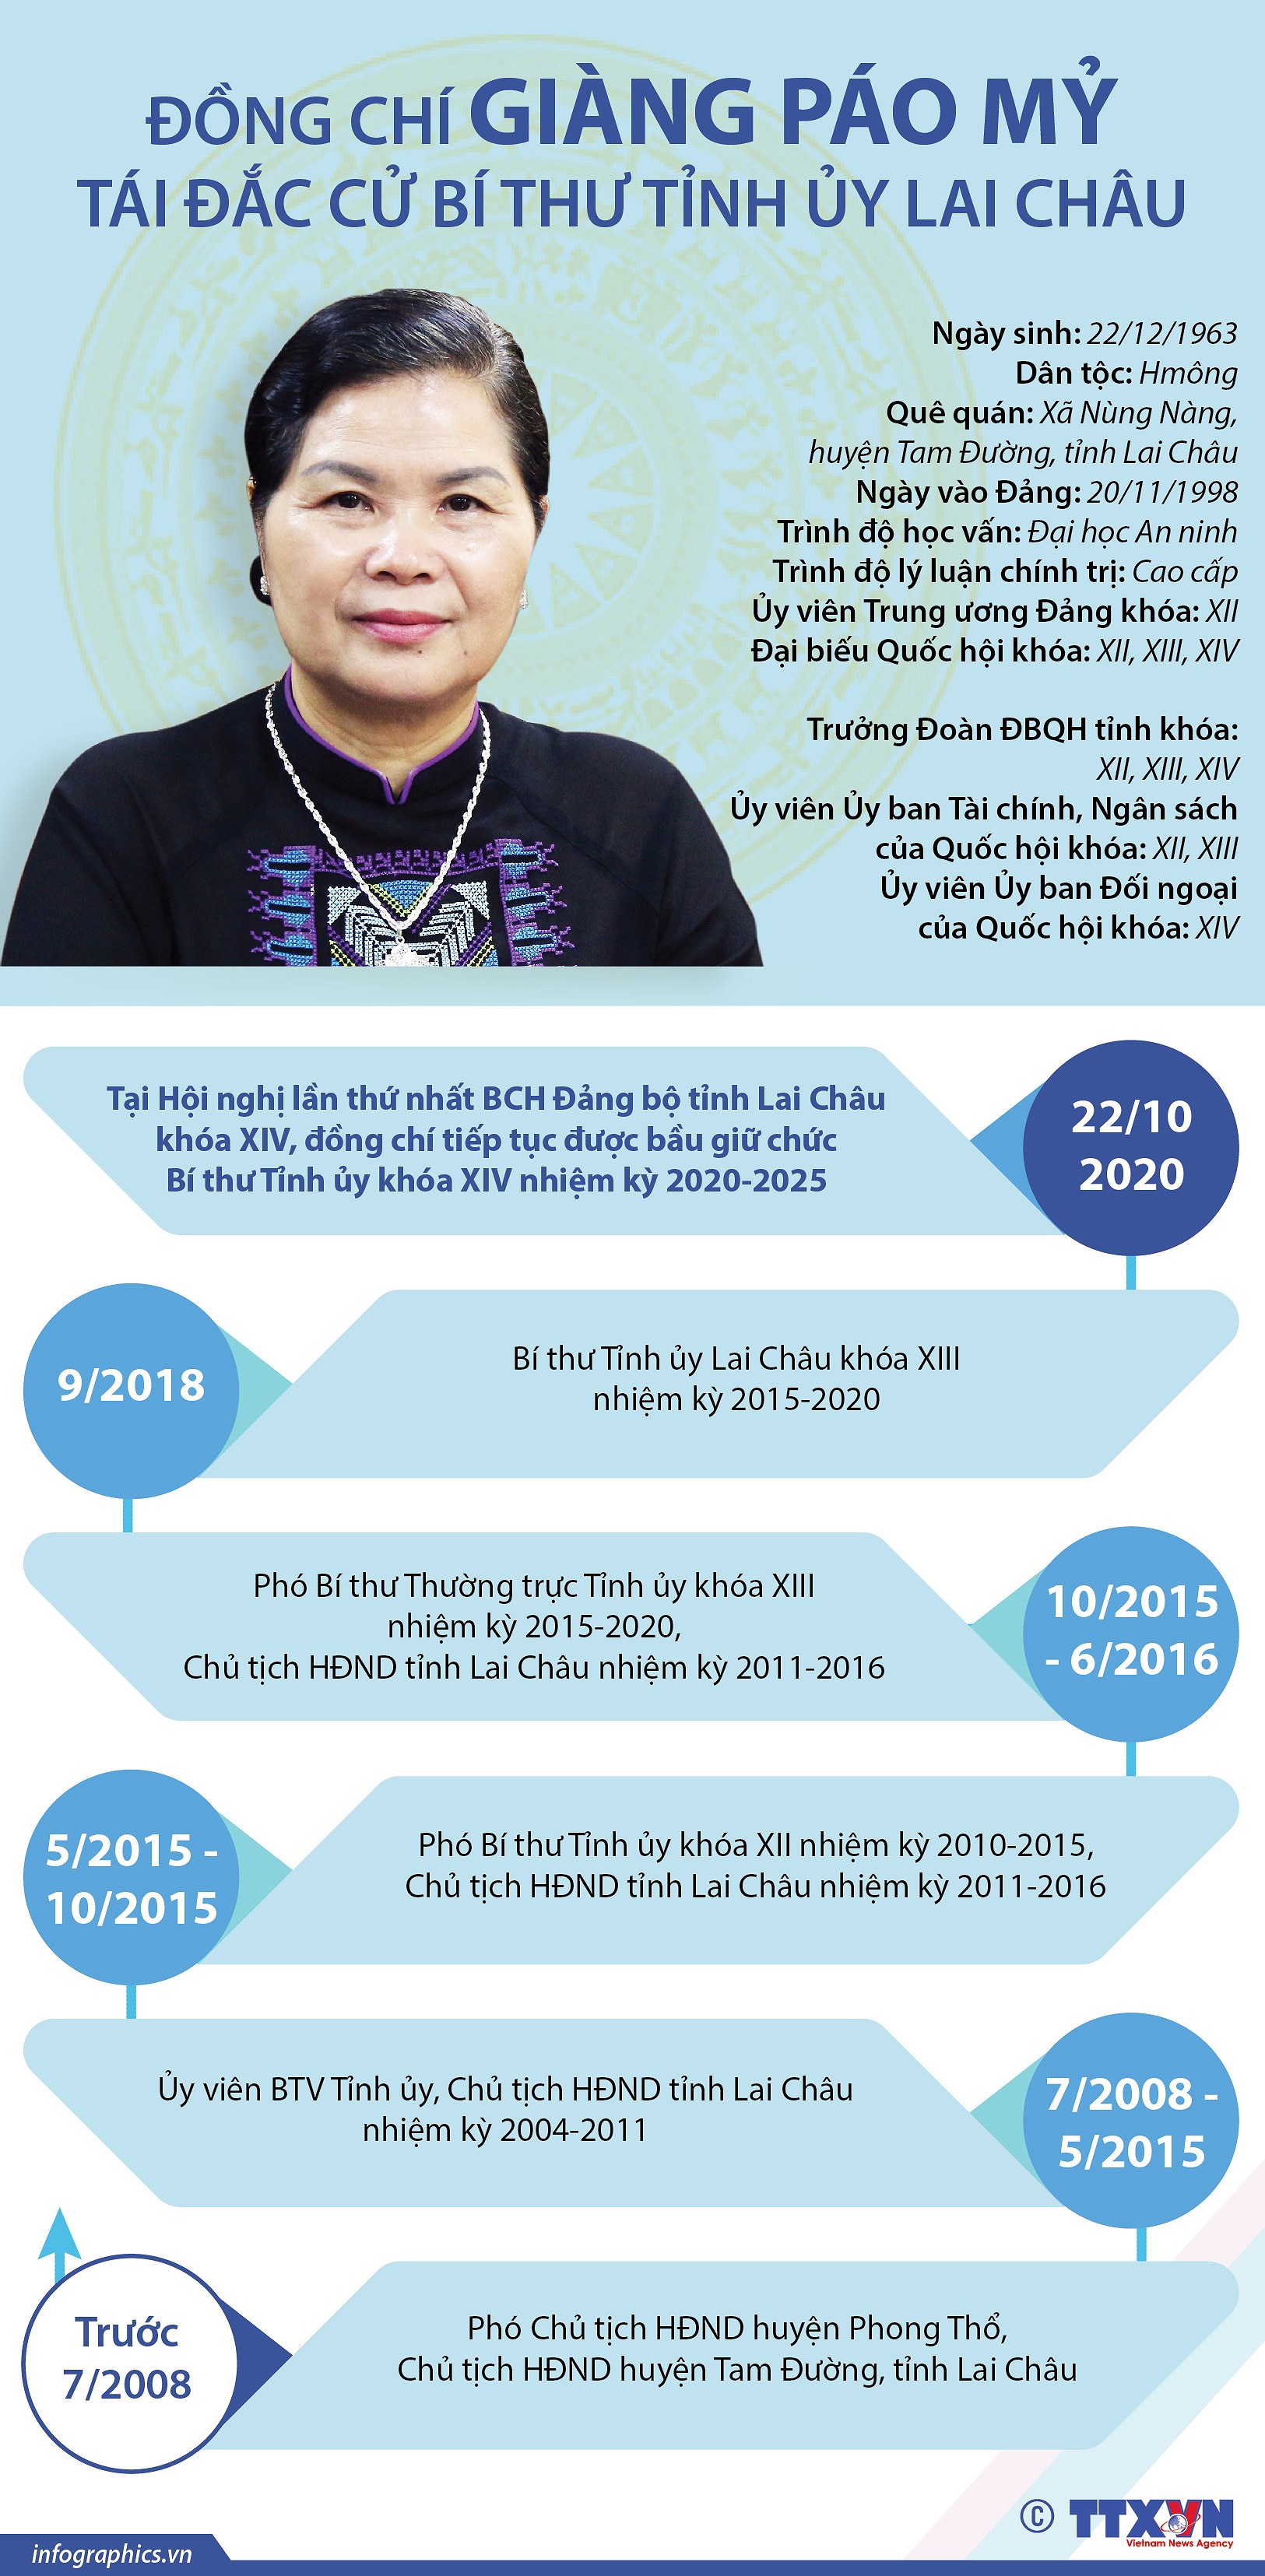 [Infographics] Bi thu Tinh uy Lai Chau khoa XIV Giang Pao My hinh anh 1